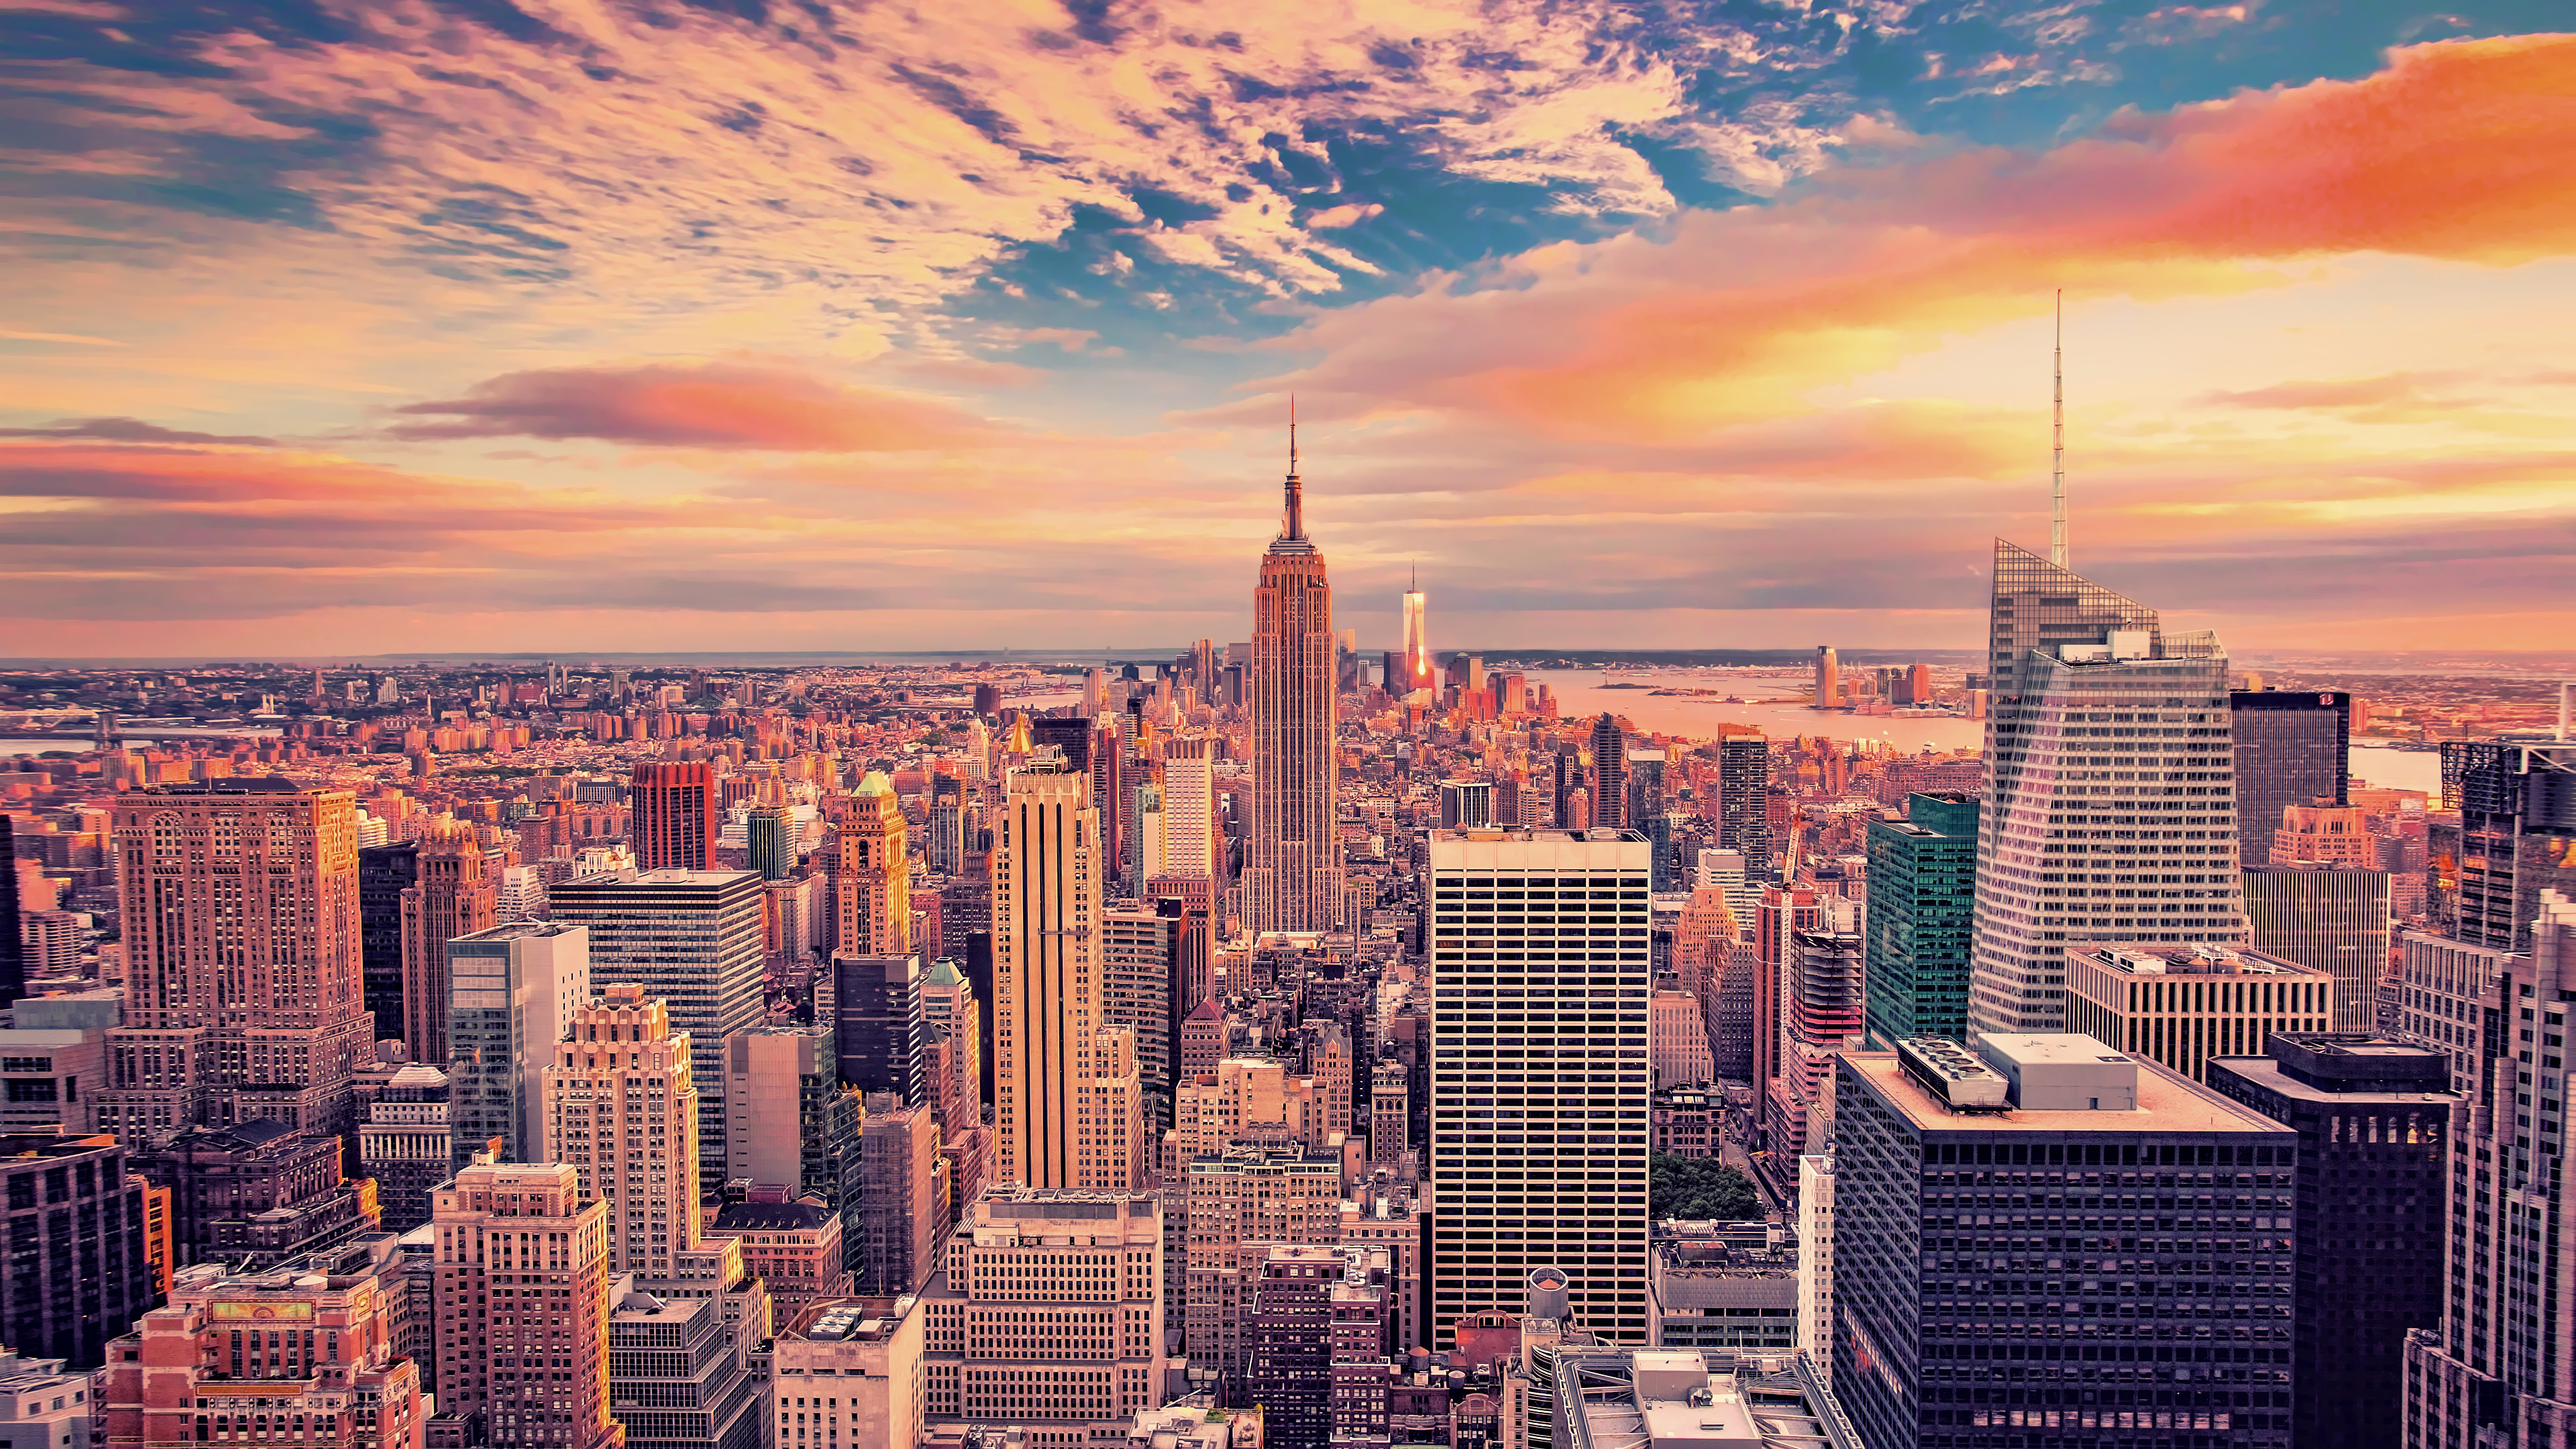 Best ideas about New York City Landscape
. Save or Pin New York City Cityscape City USA Empire State Building Now.